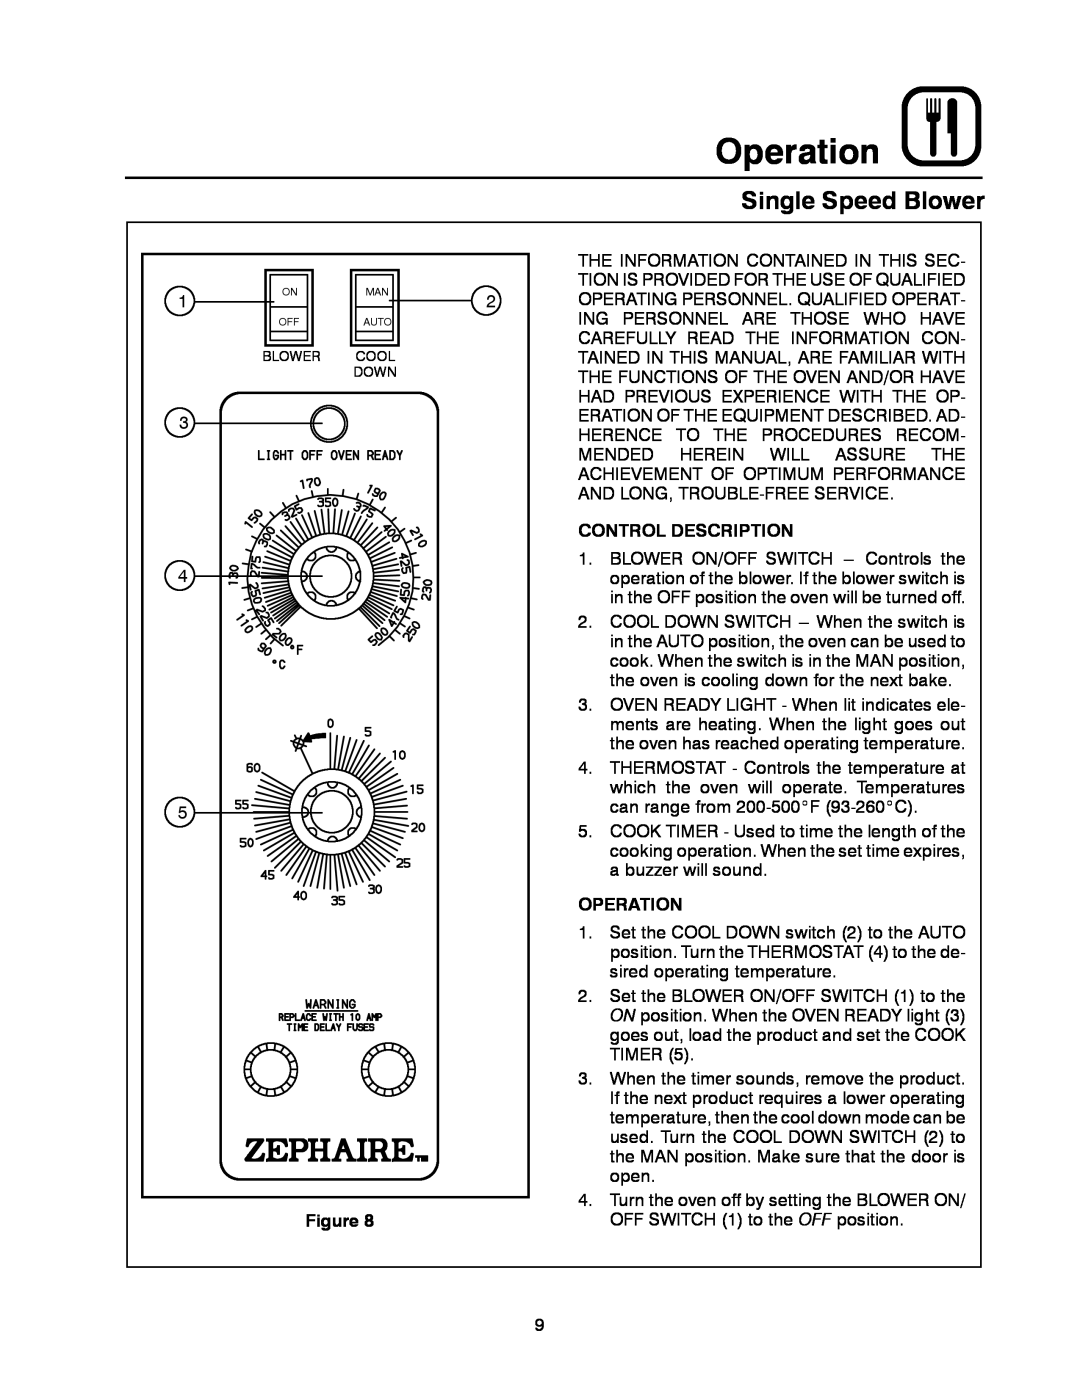 Blodgett ZEPHAIRE-E manual Operation, Single Speed Blower, Control Description 